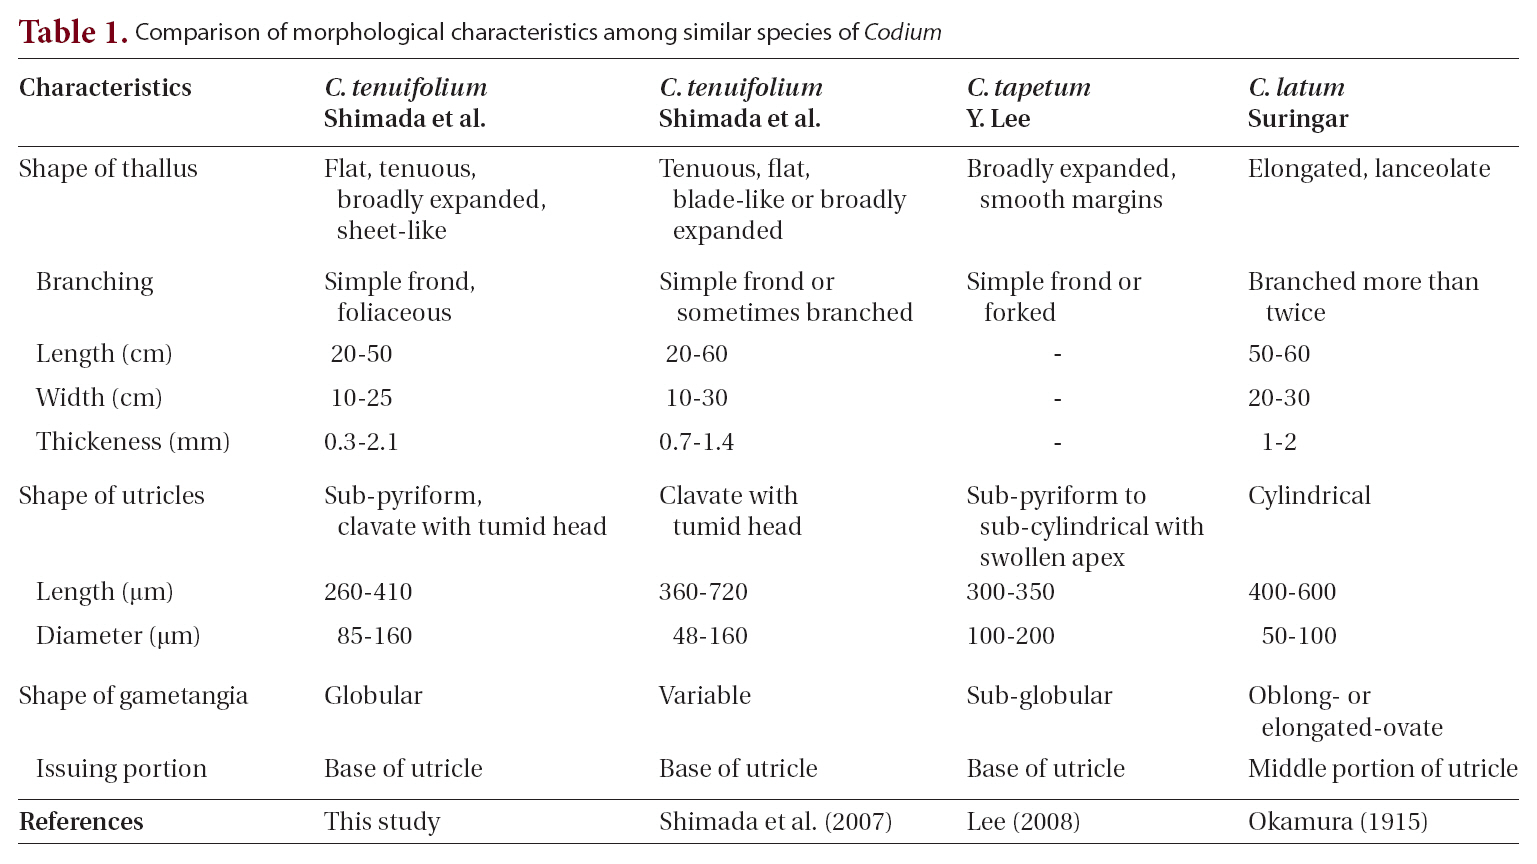 Comparison of morphological characteristics among similar species of Codium